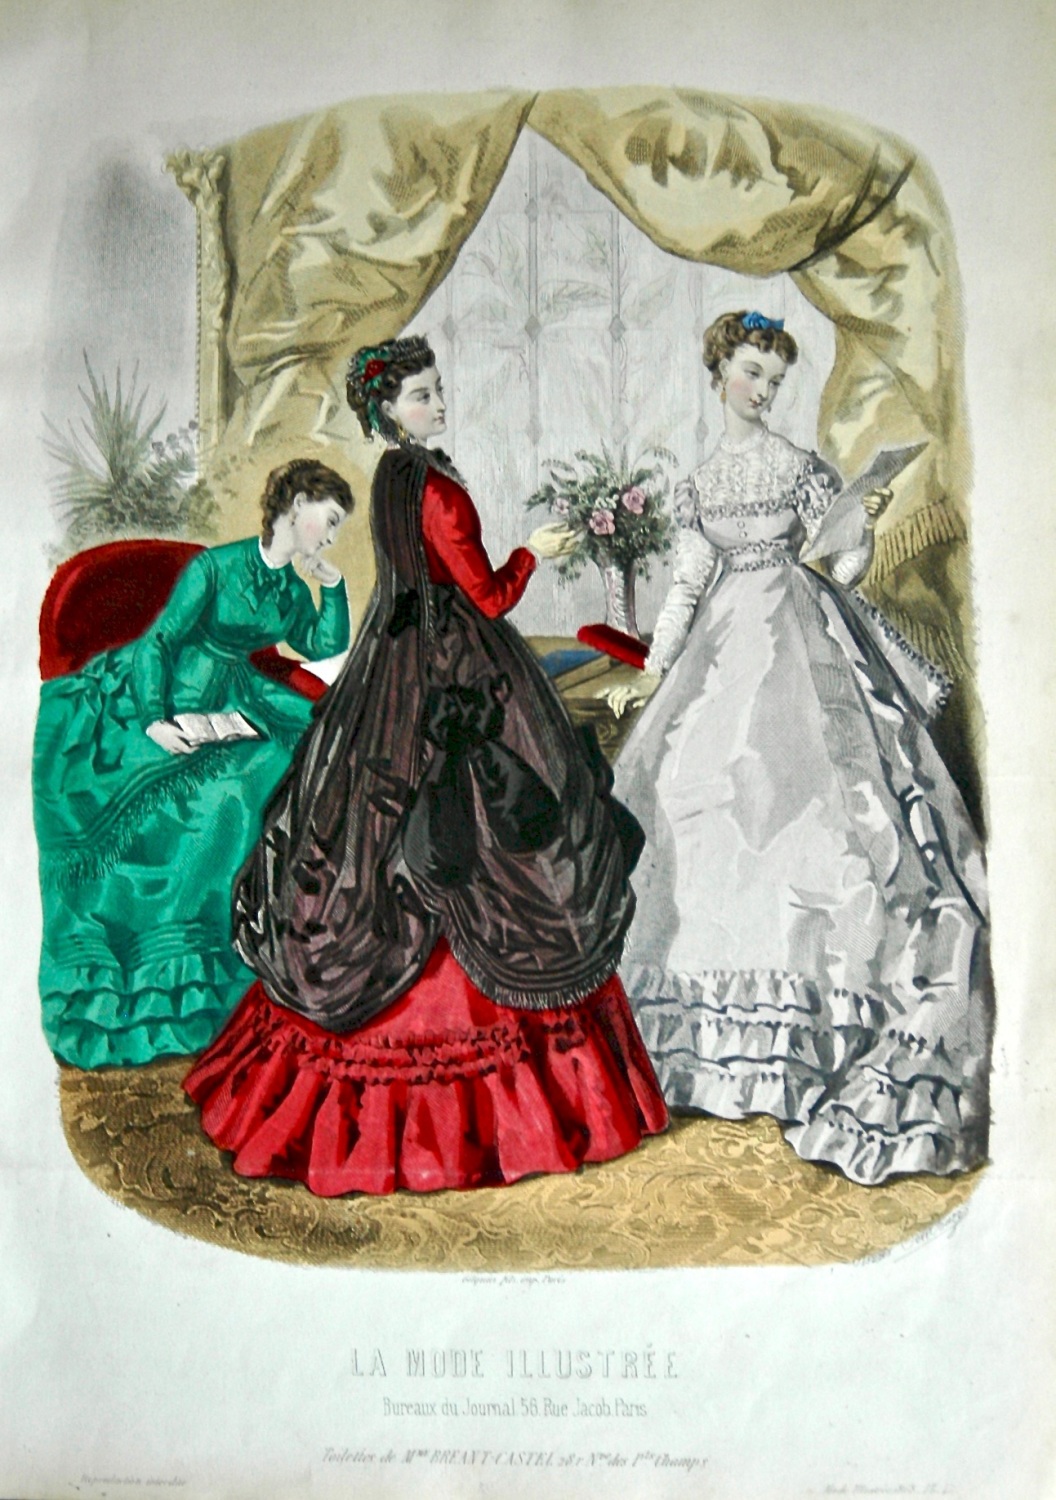 La Mode Illustree. 1869. Number 43. (Coloured Lithograph)